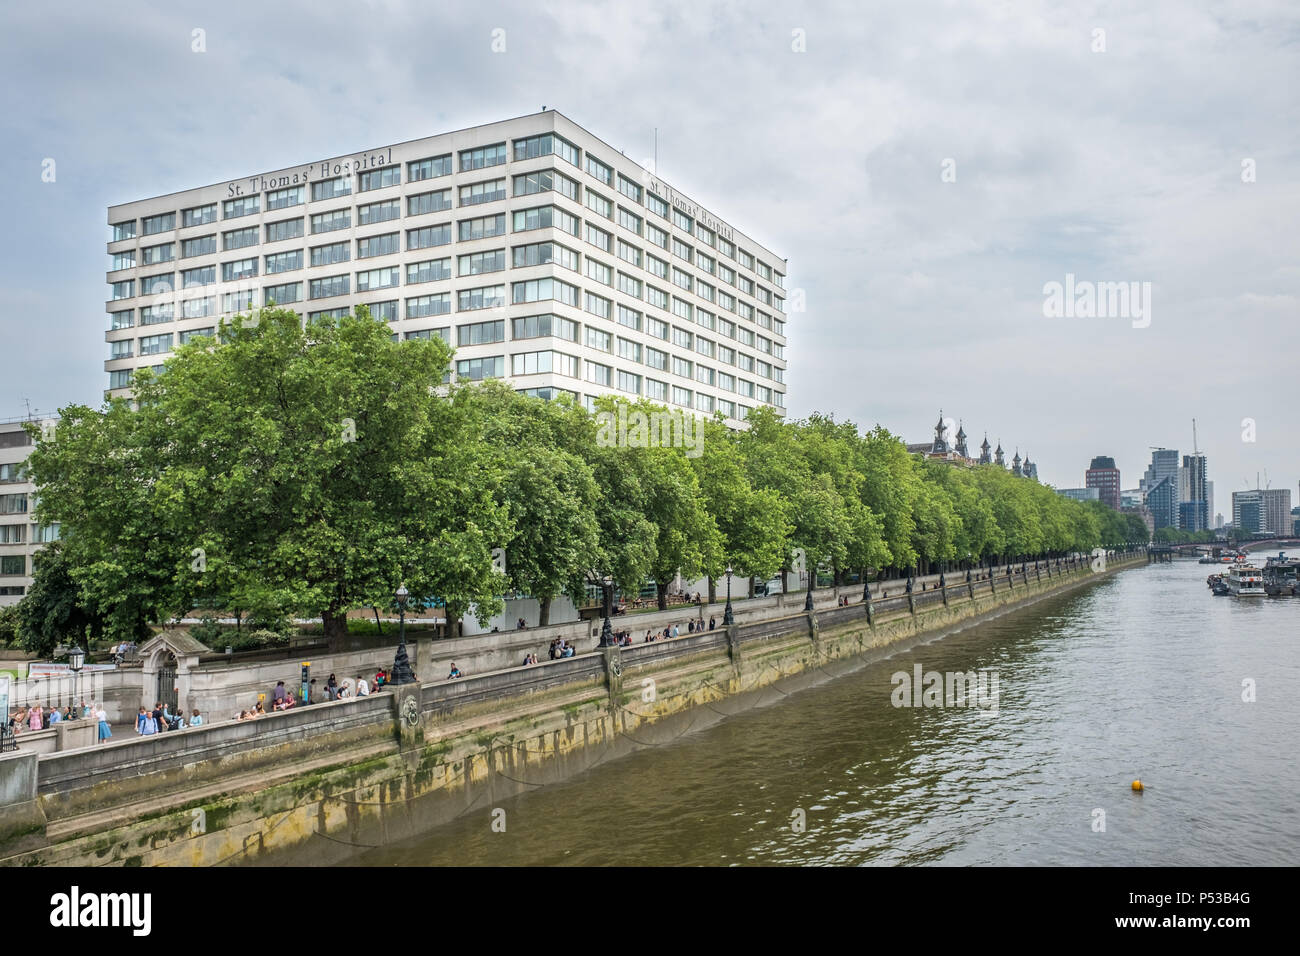 St Thomas hospital next to the river Thames at Westminster bridge, London, England. Stock Photo